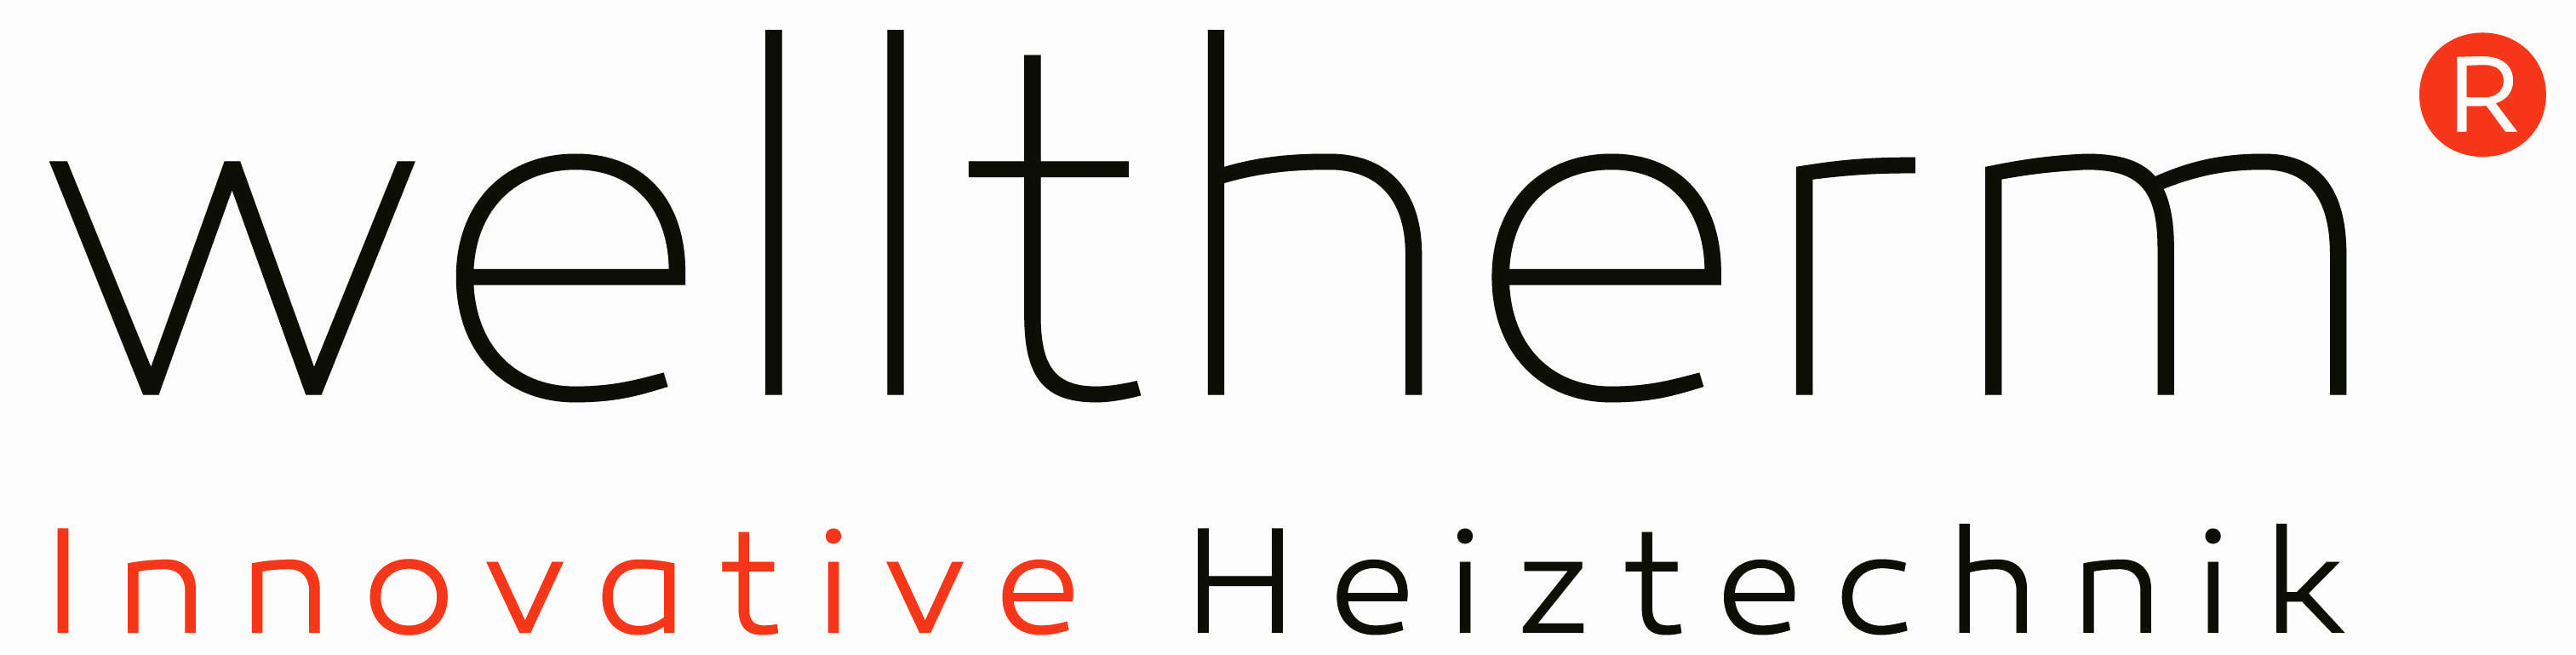 Welltherm Logo_Claim2021.jpg